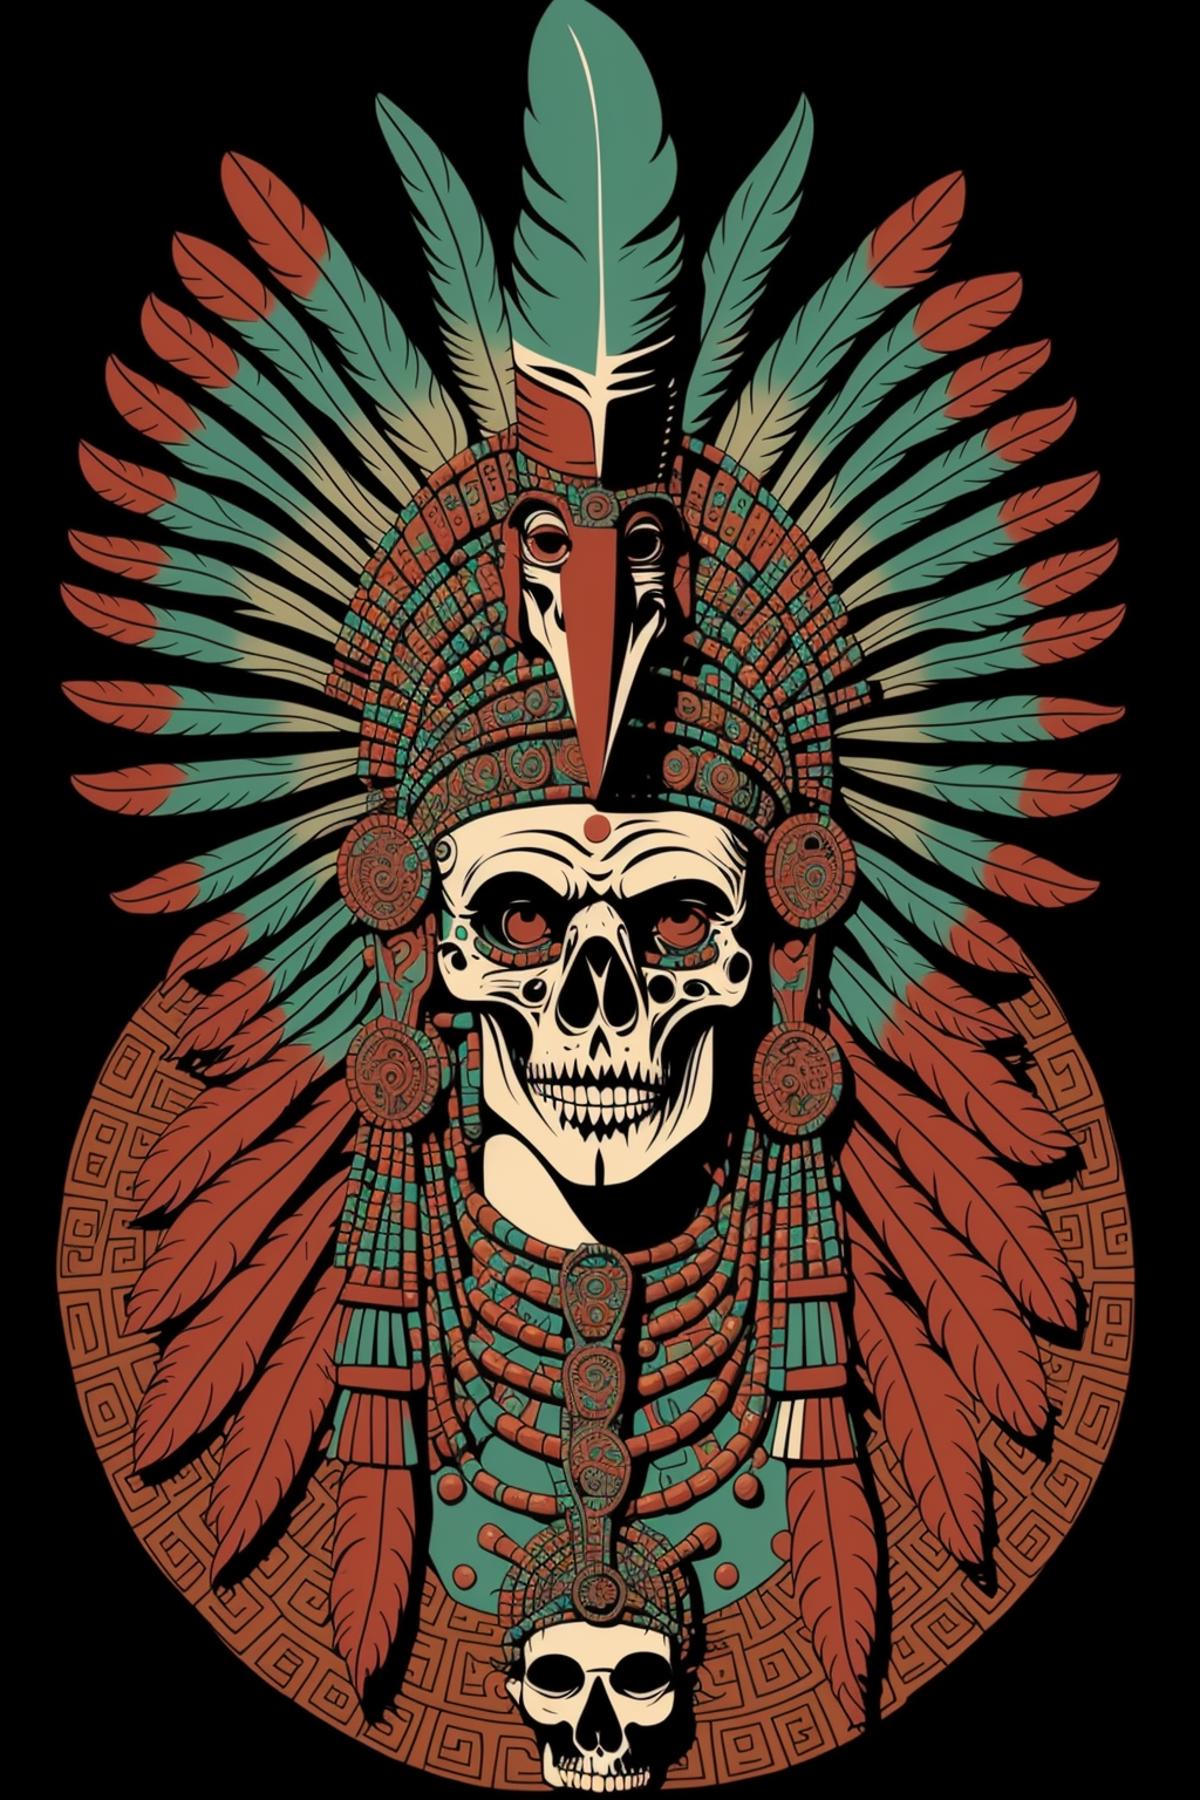 Aztec Style image by Ciro_Negrogni